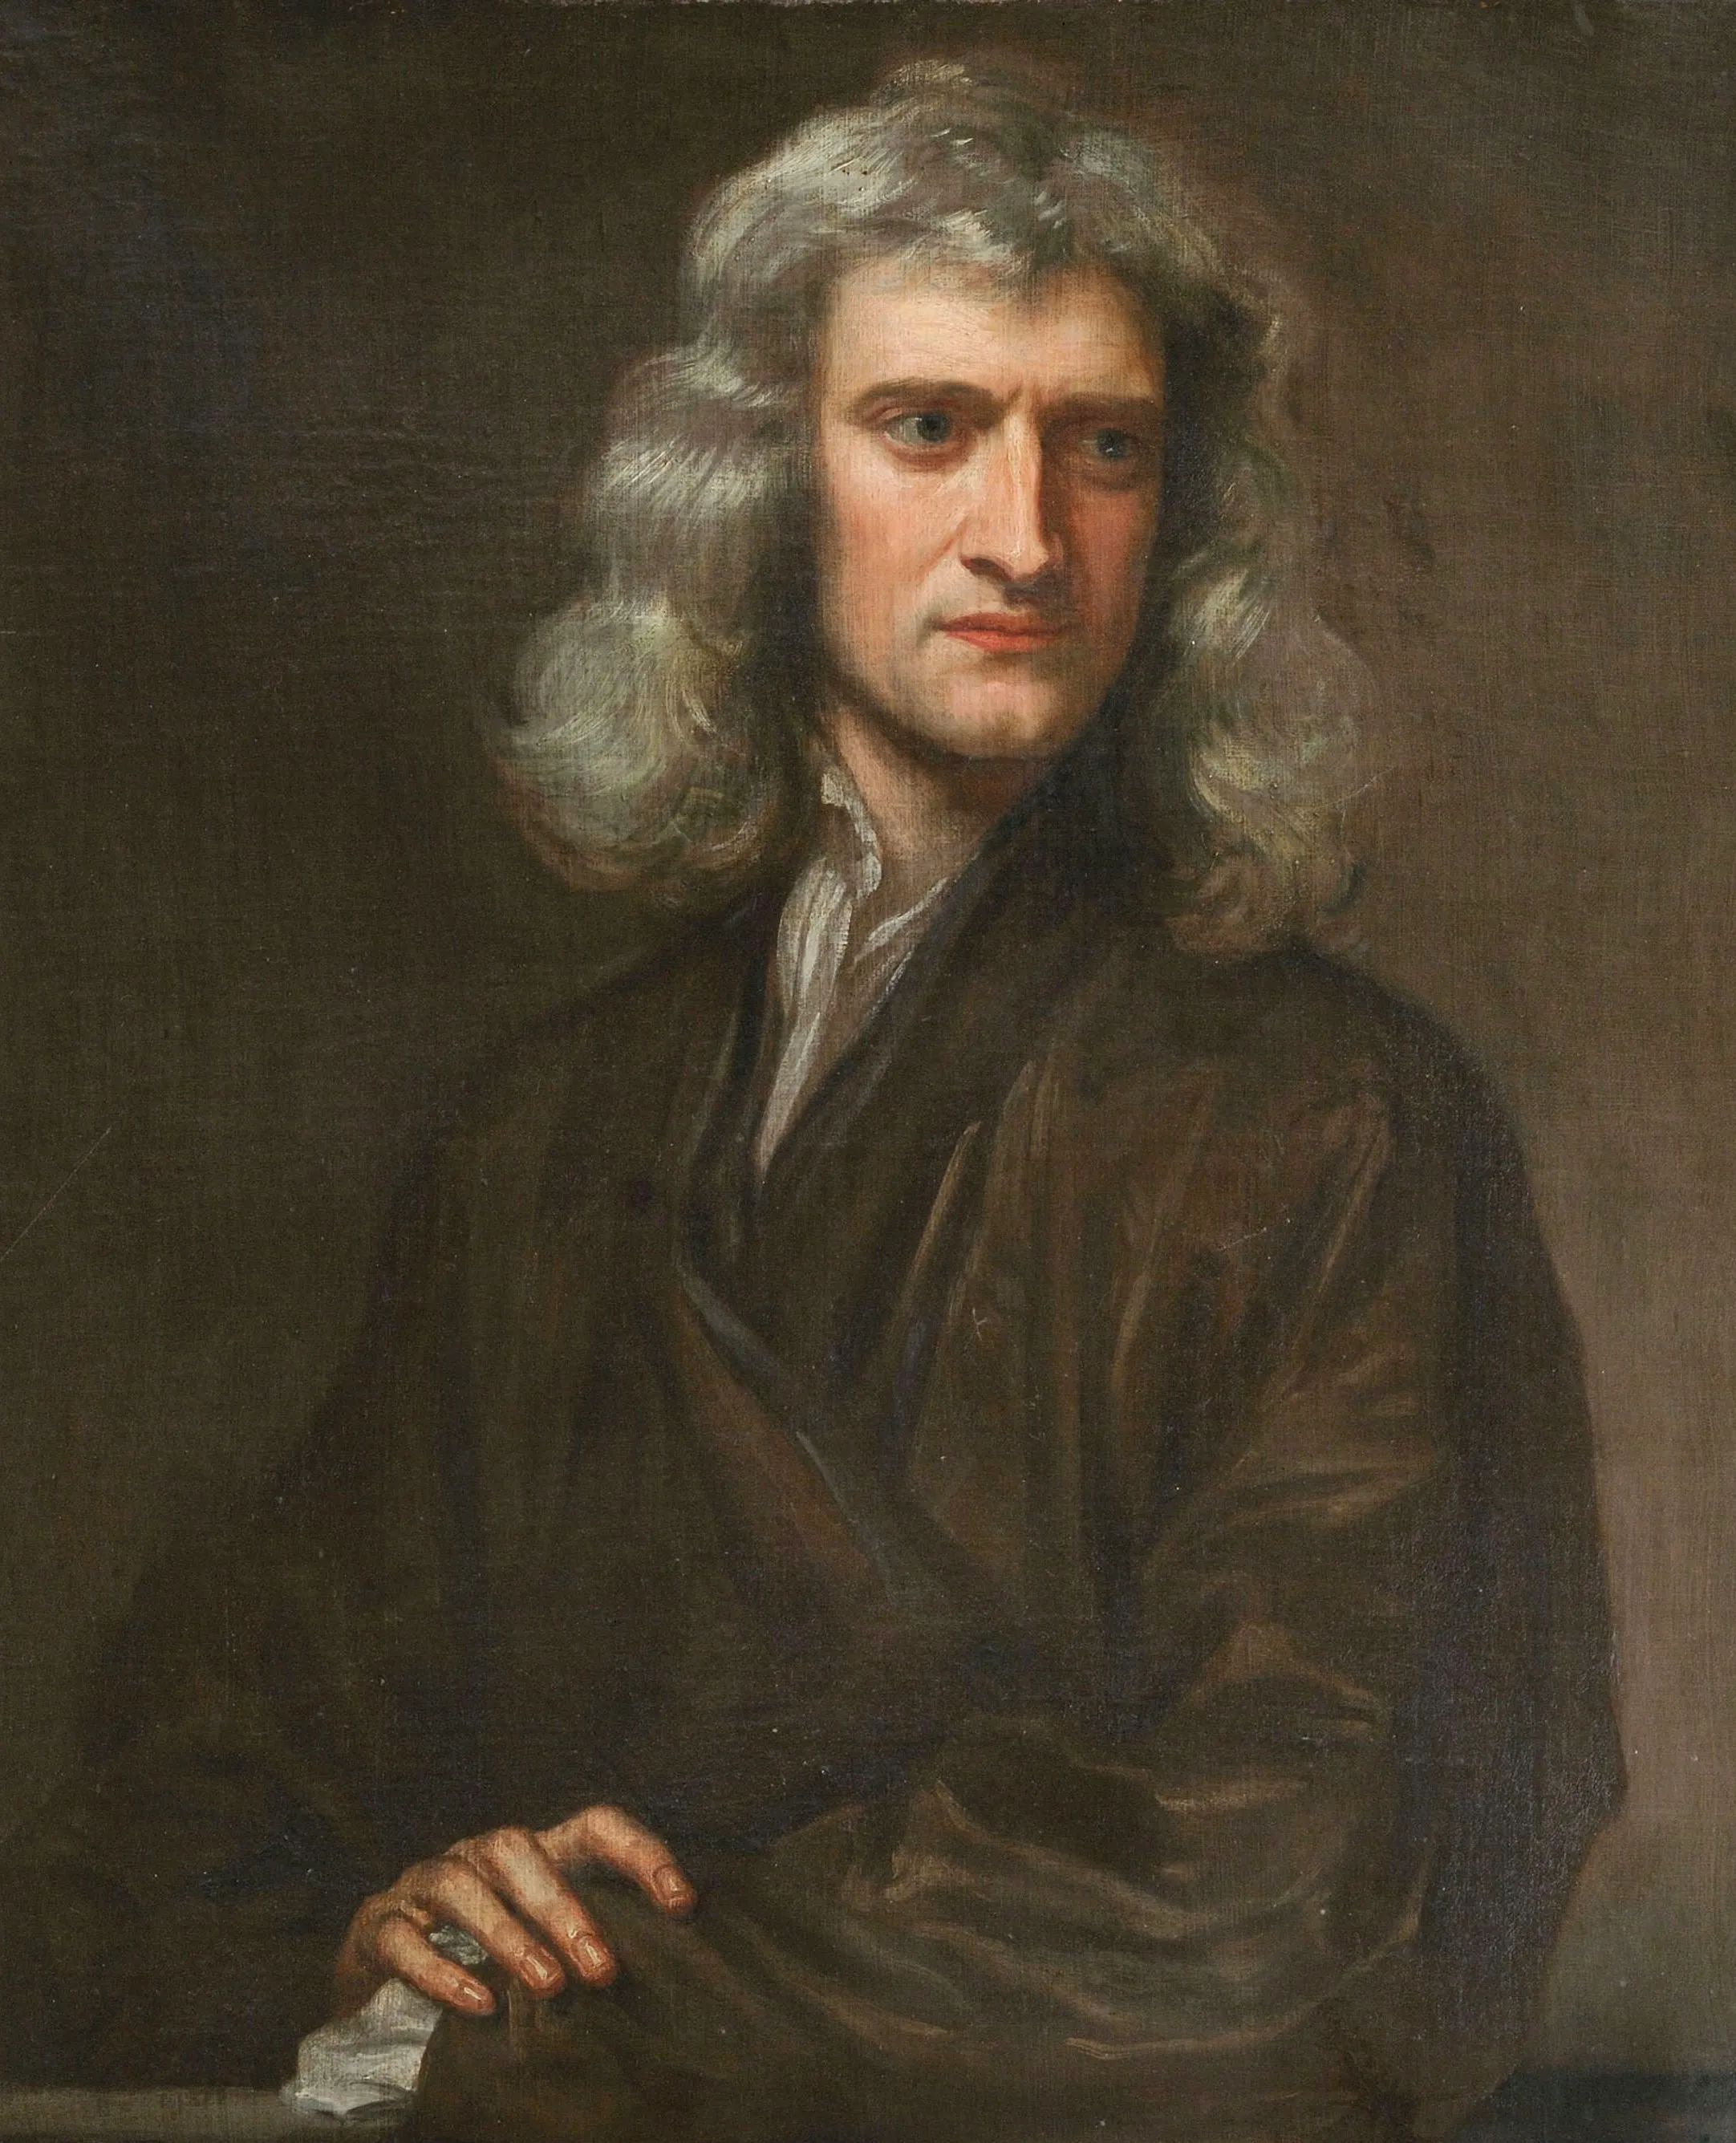 Painting of Isaac Newton